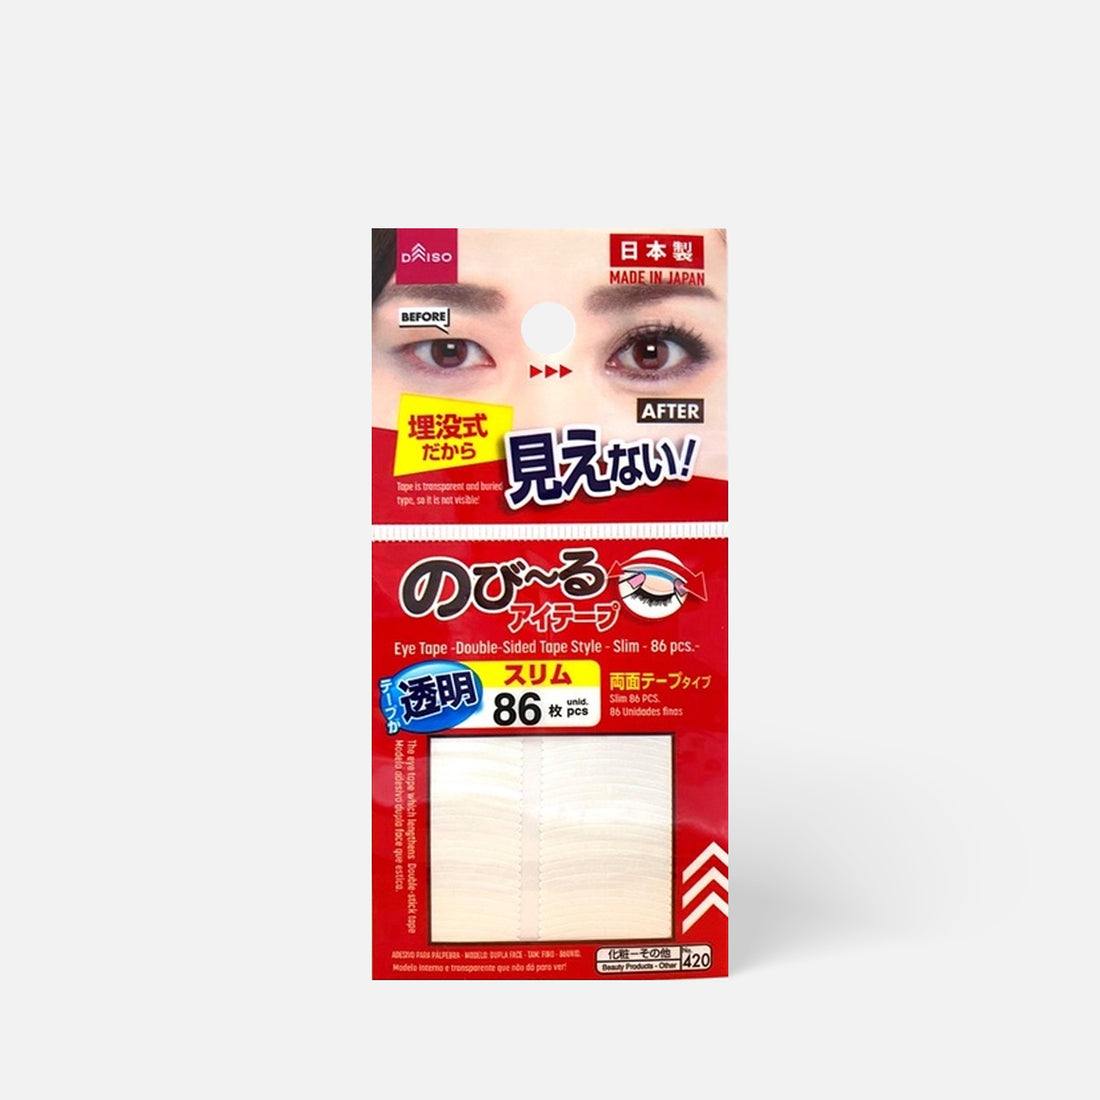 DAISO thin double eyelid tape